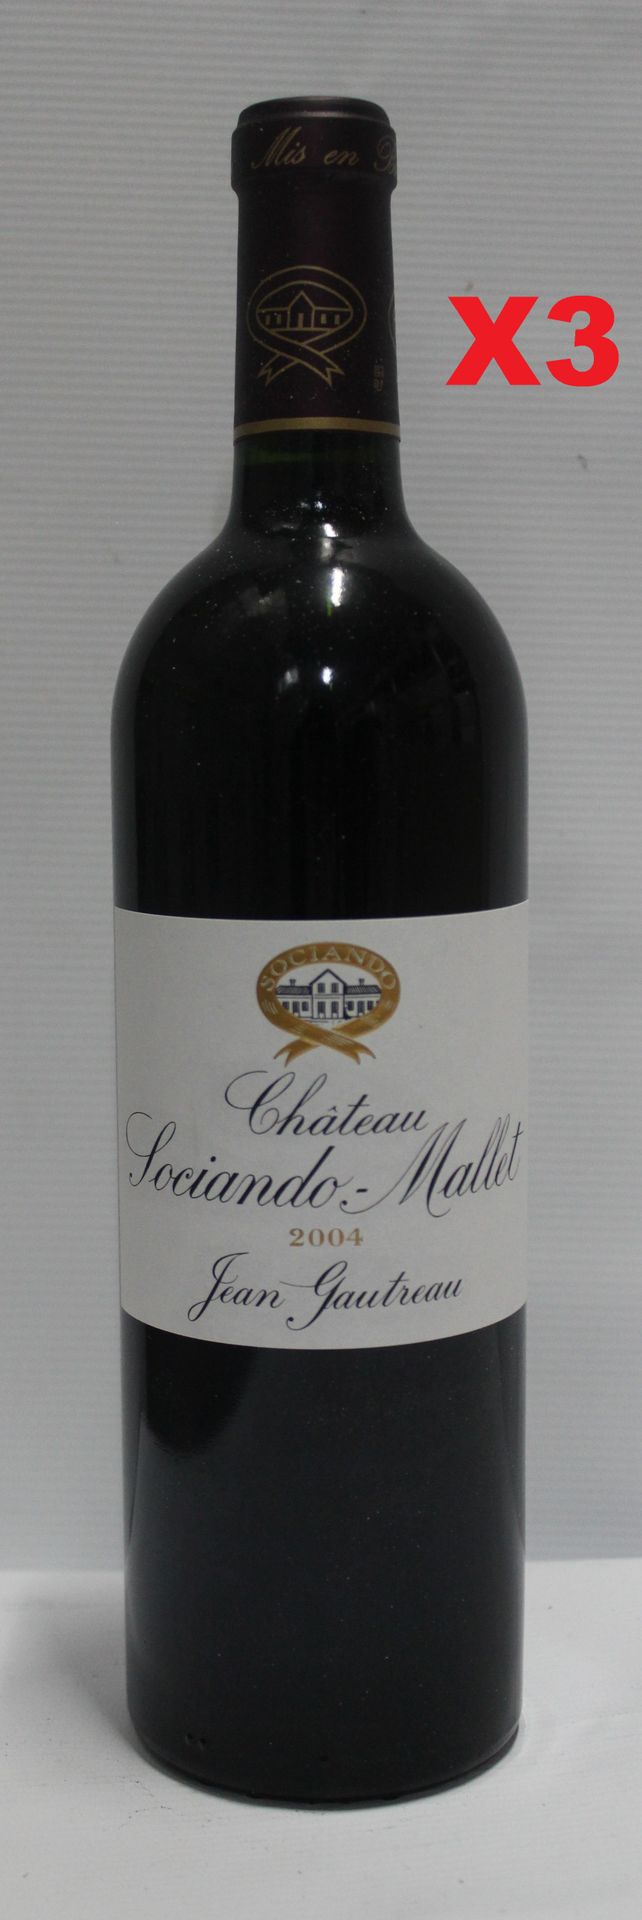 Null 3 bottiglie 75cl - Haut-Médoc - Château SOCIANDO MALLET - Rosso 2004

Botti&hellip;